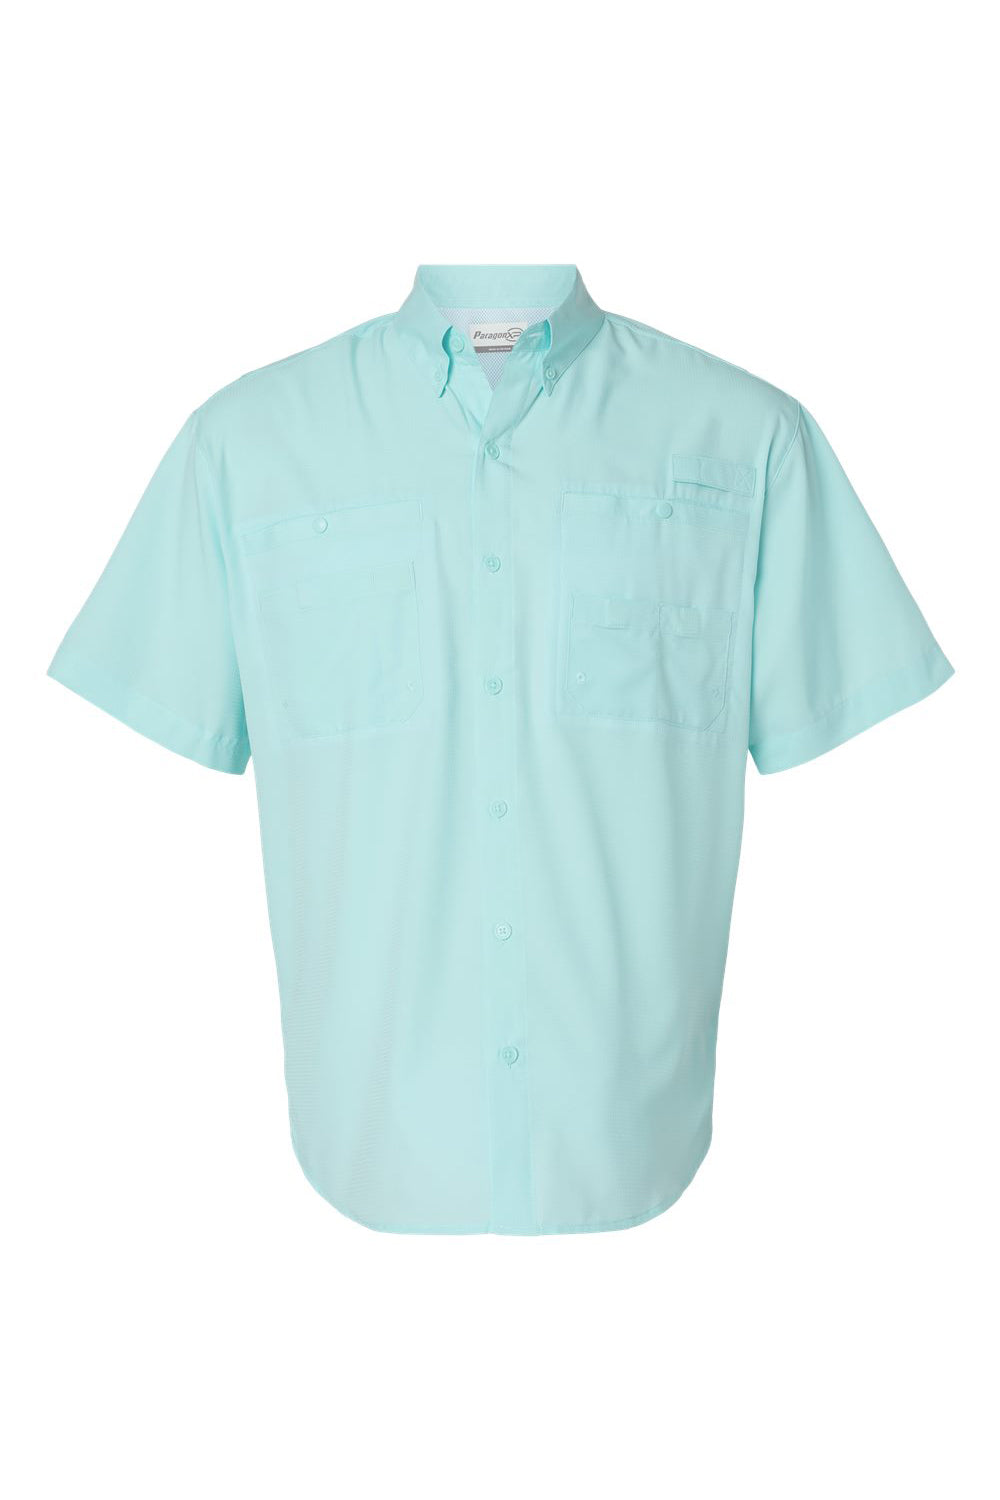 Paragon 700 Mens Hatteras Performance Short Sleeve Button Down Shirt Aqua Blue Flat Front